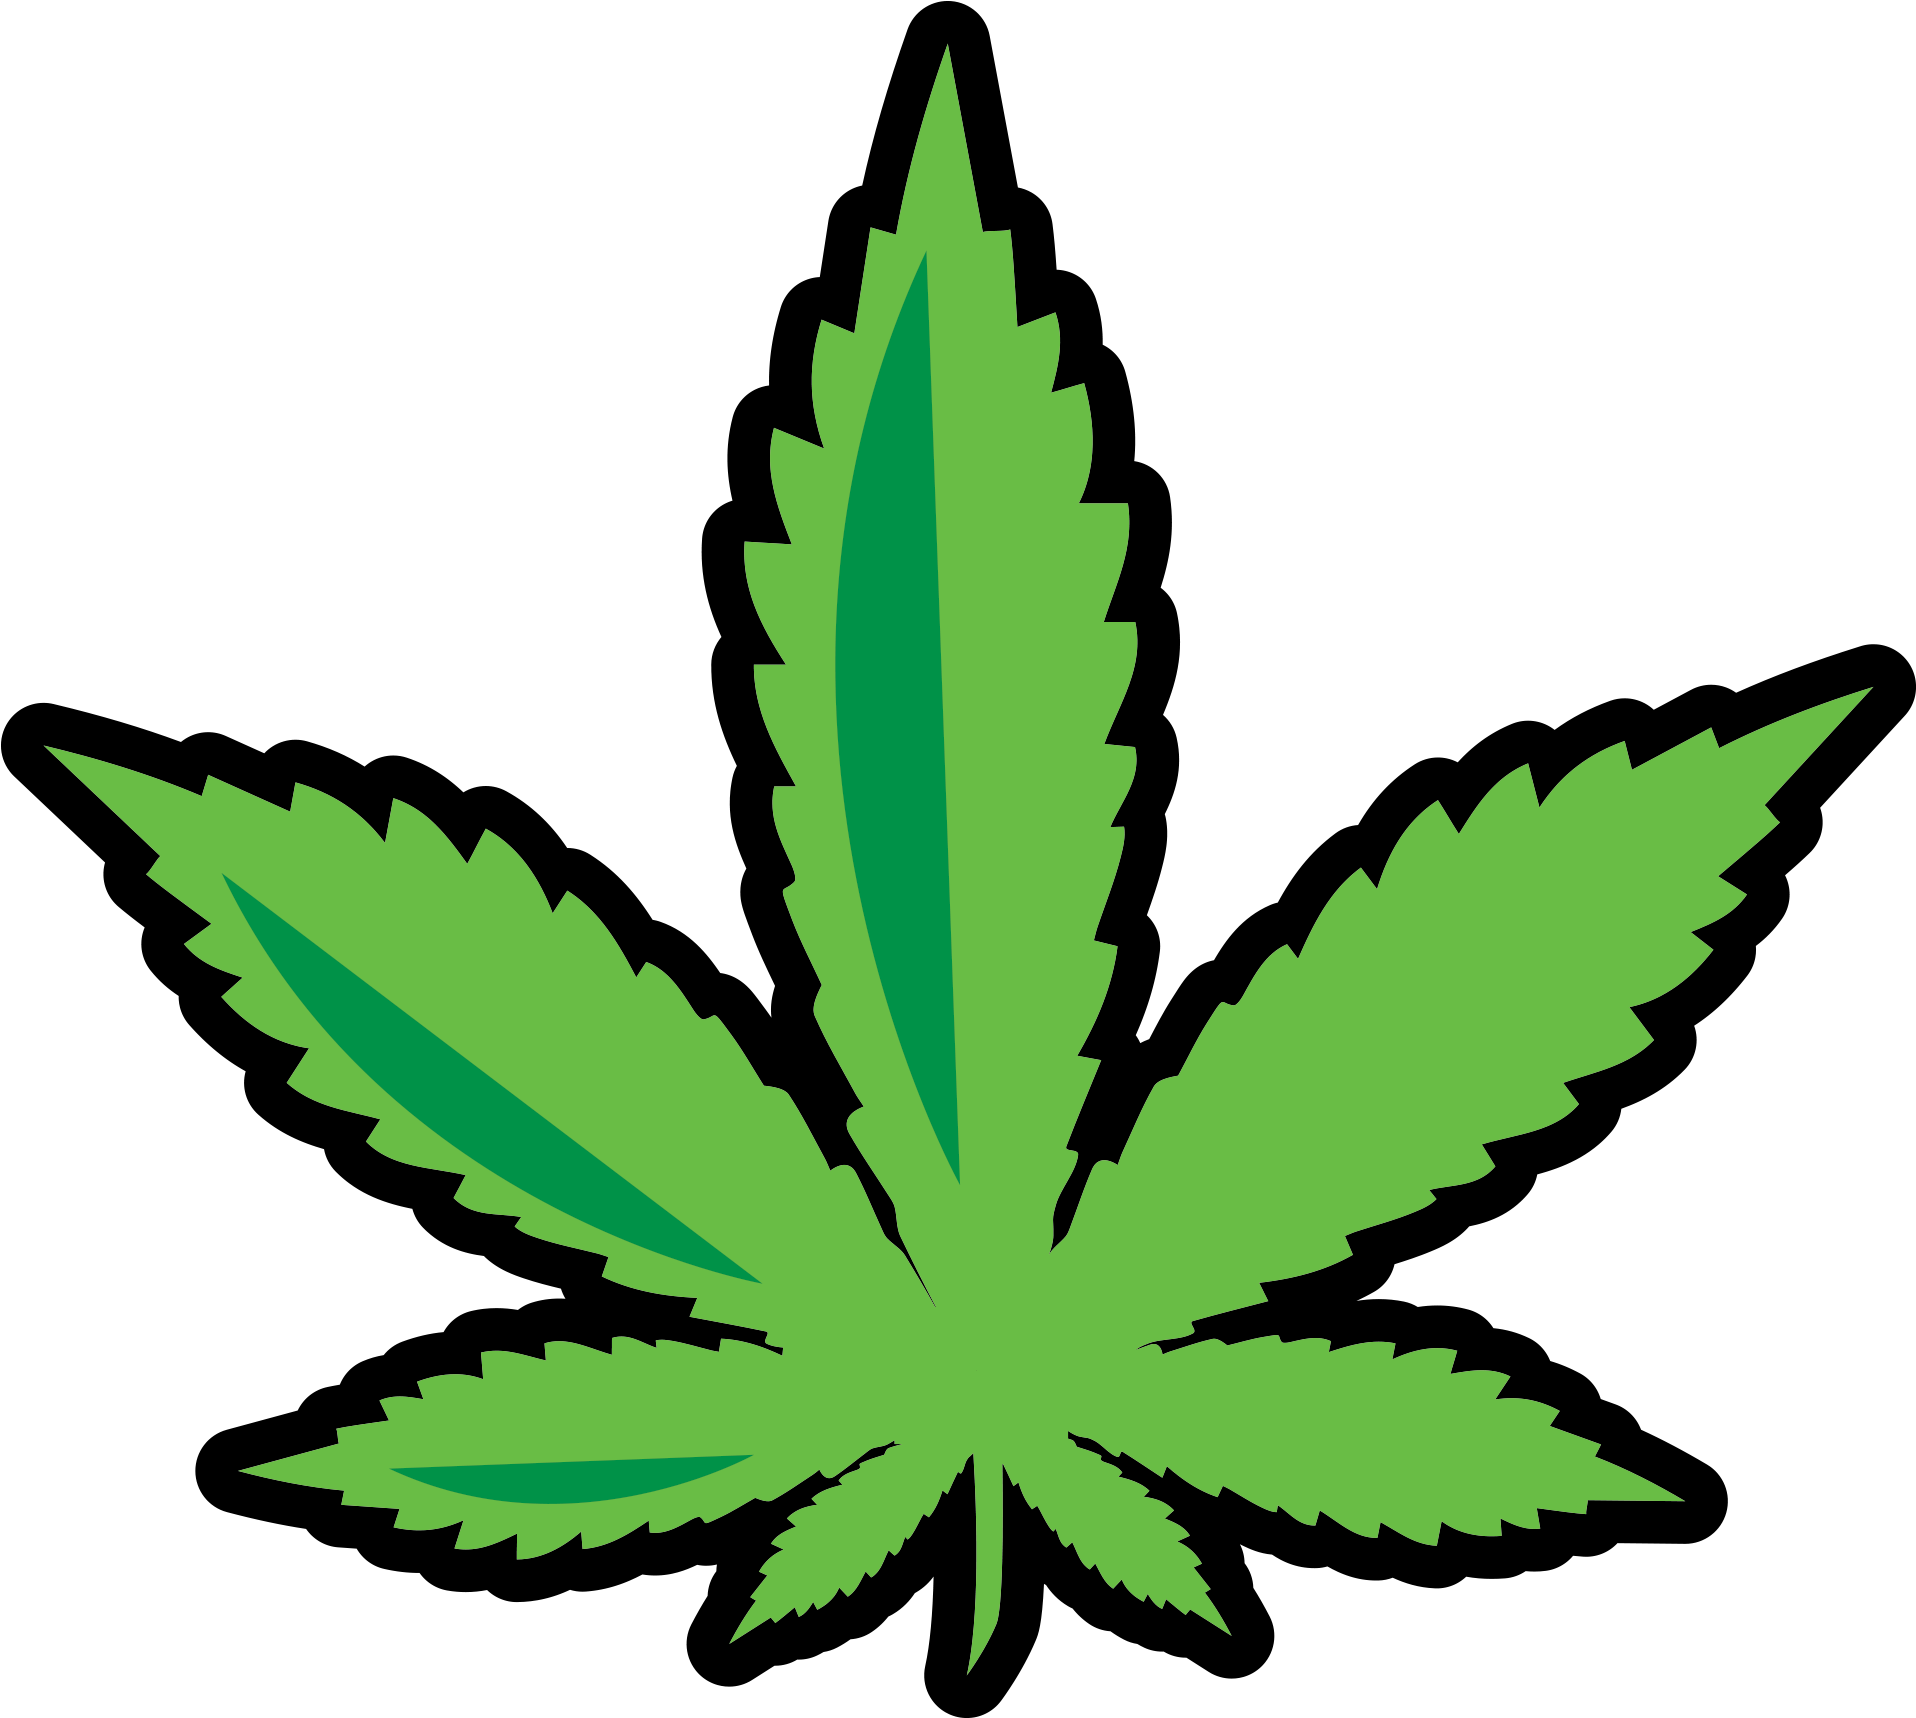 weed logo